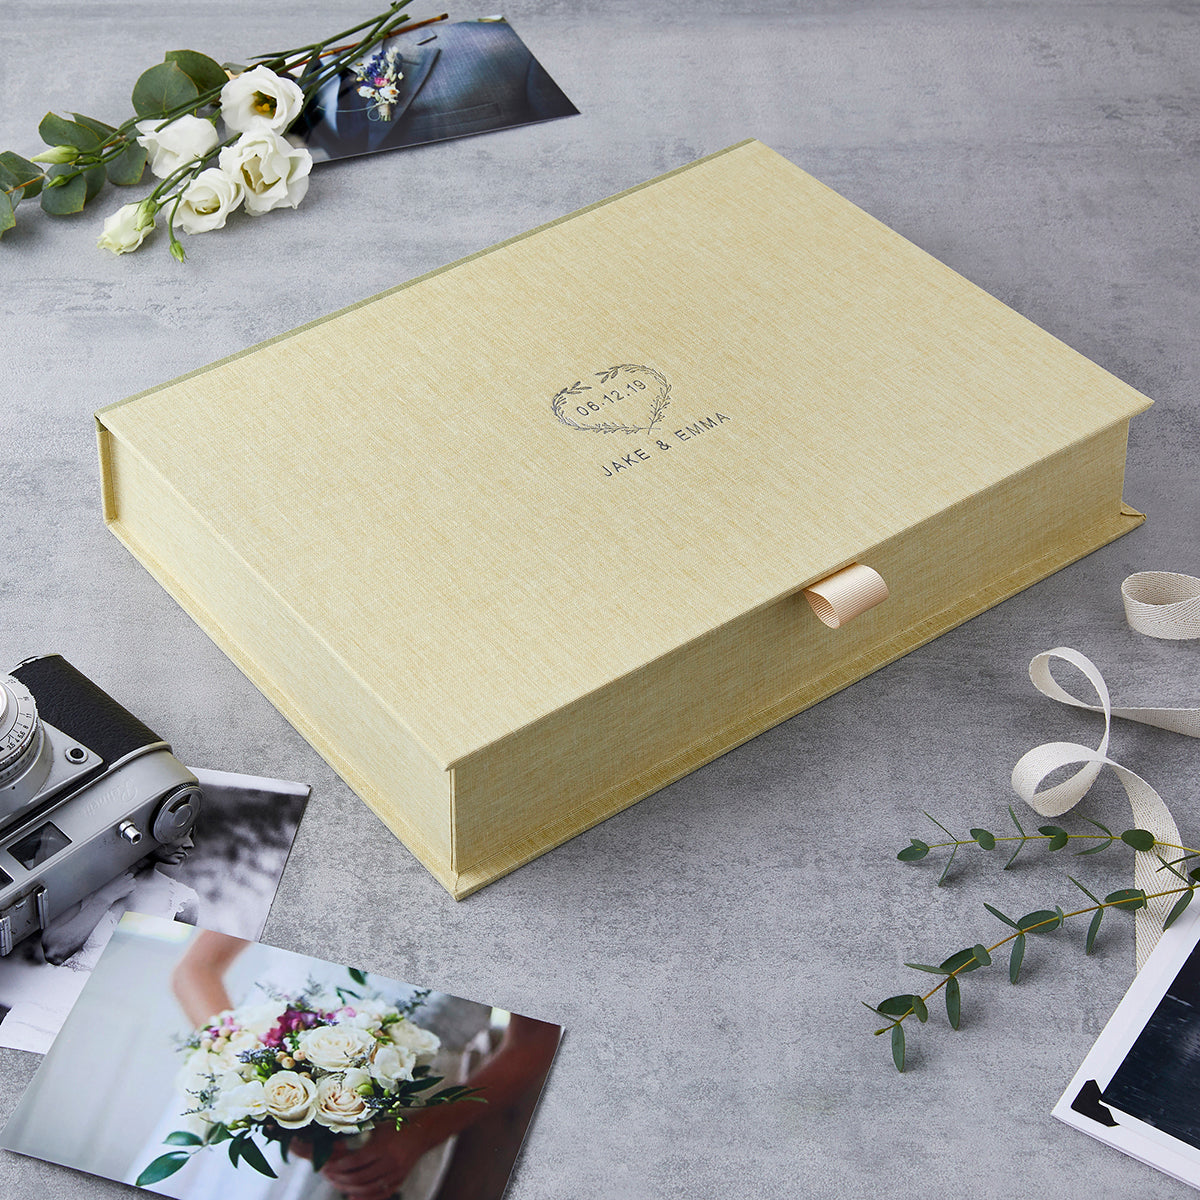 Stylish Wedding Gifts from Sunday • Homeware & Design for Weddings